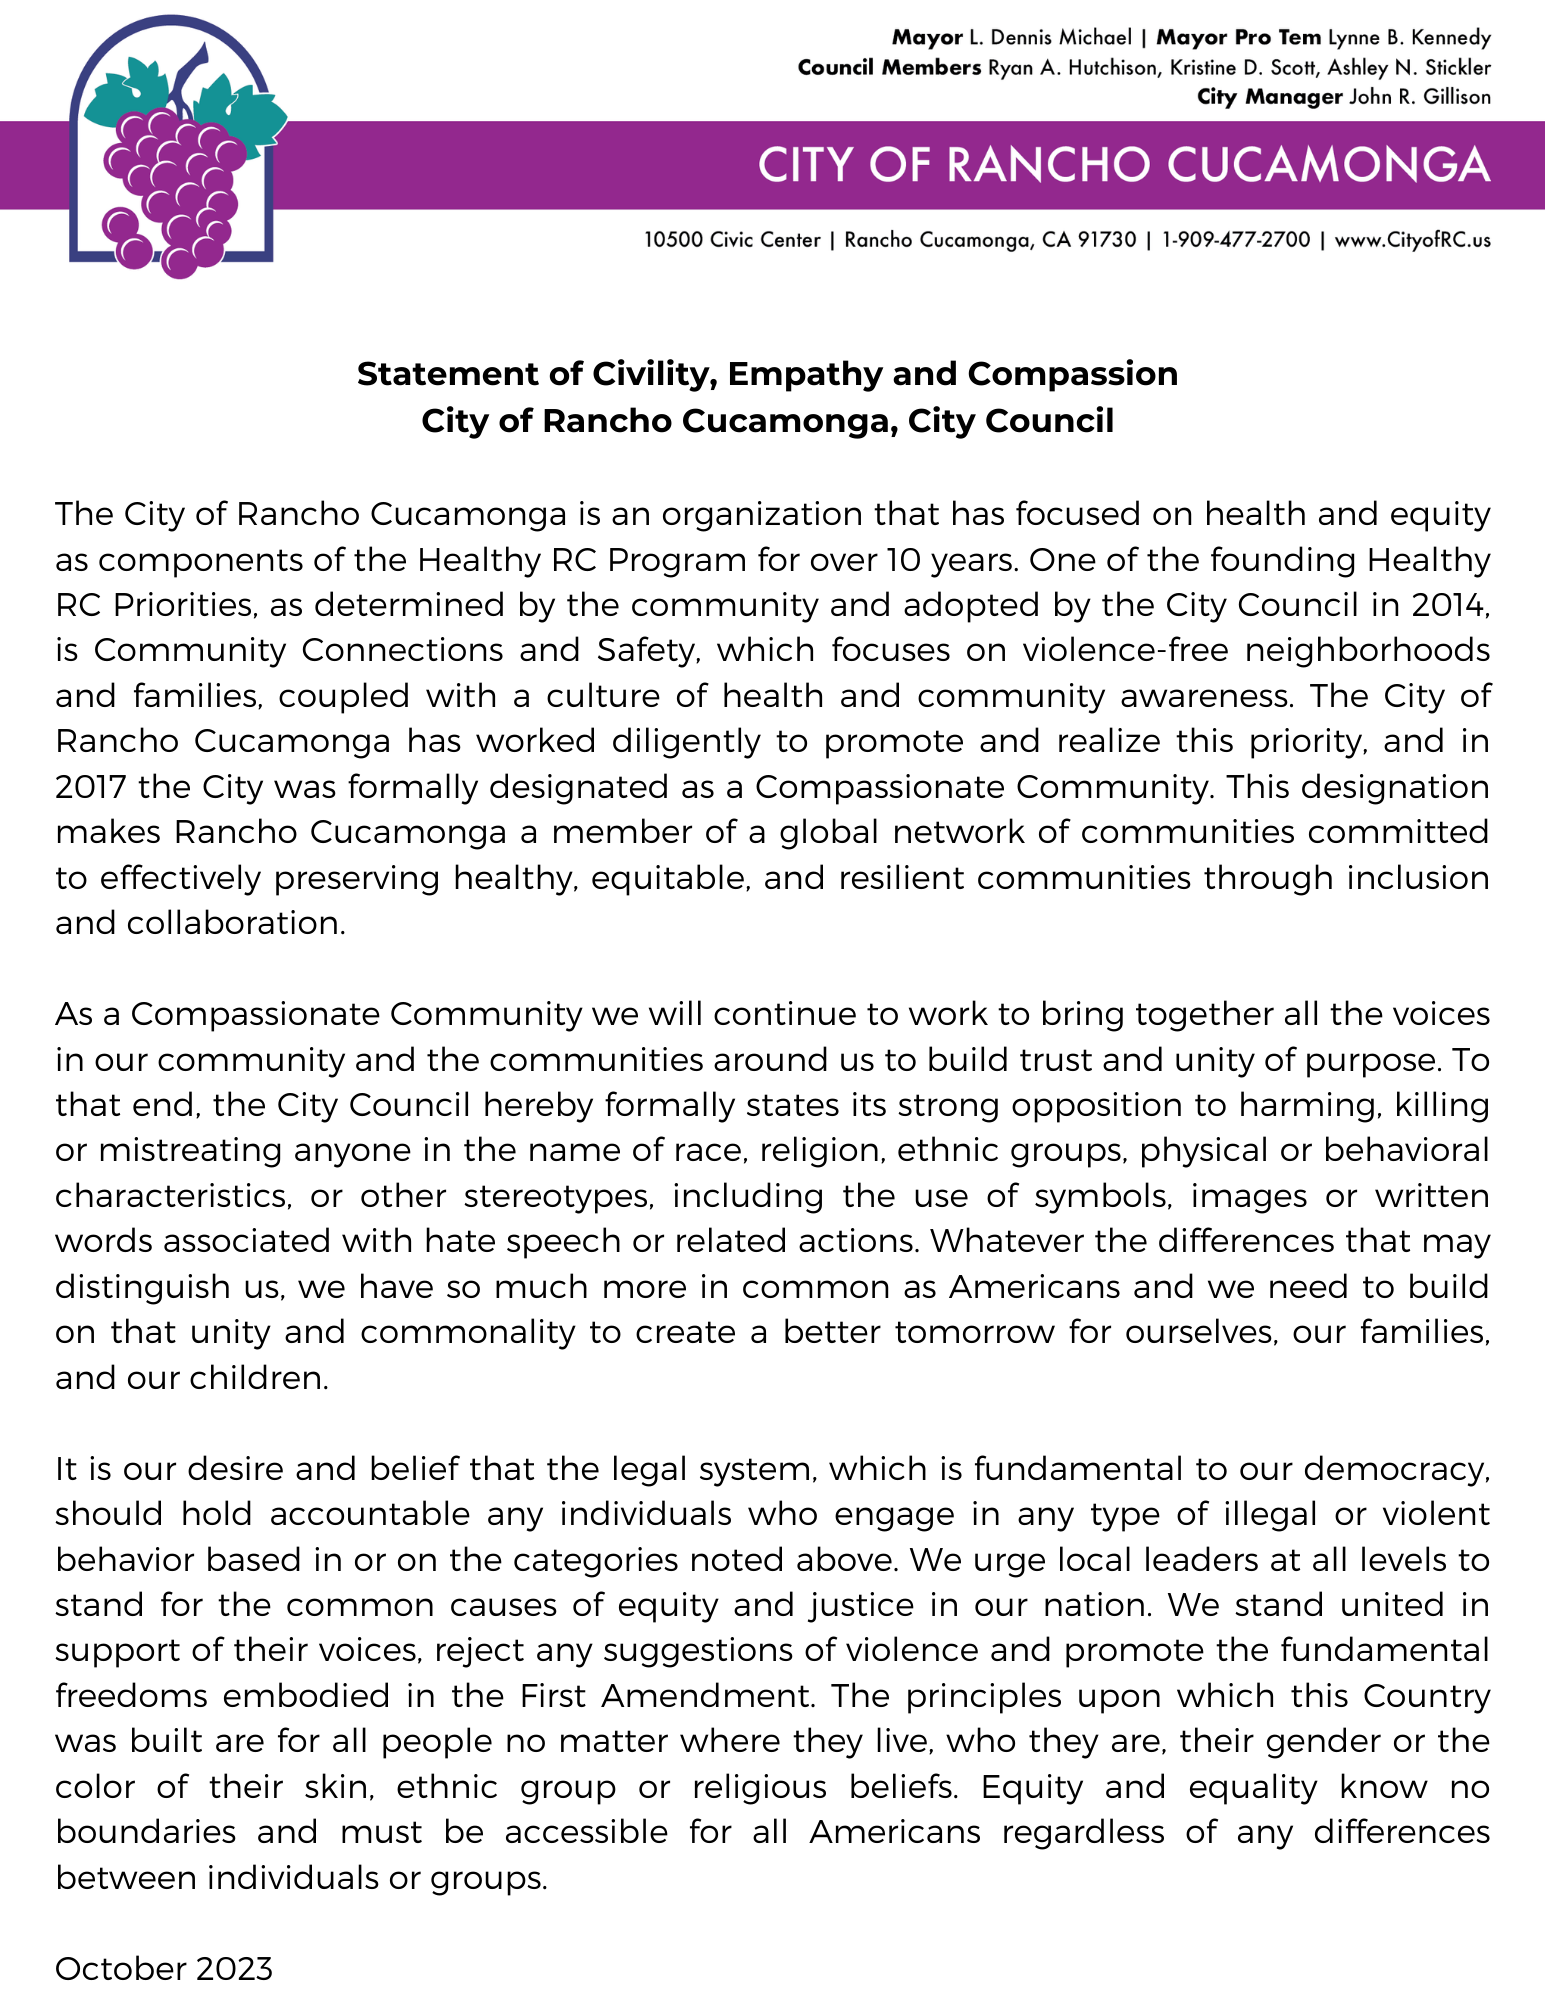 City Council Statement of Civility